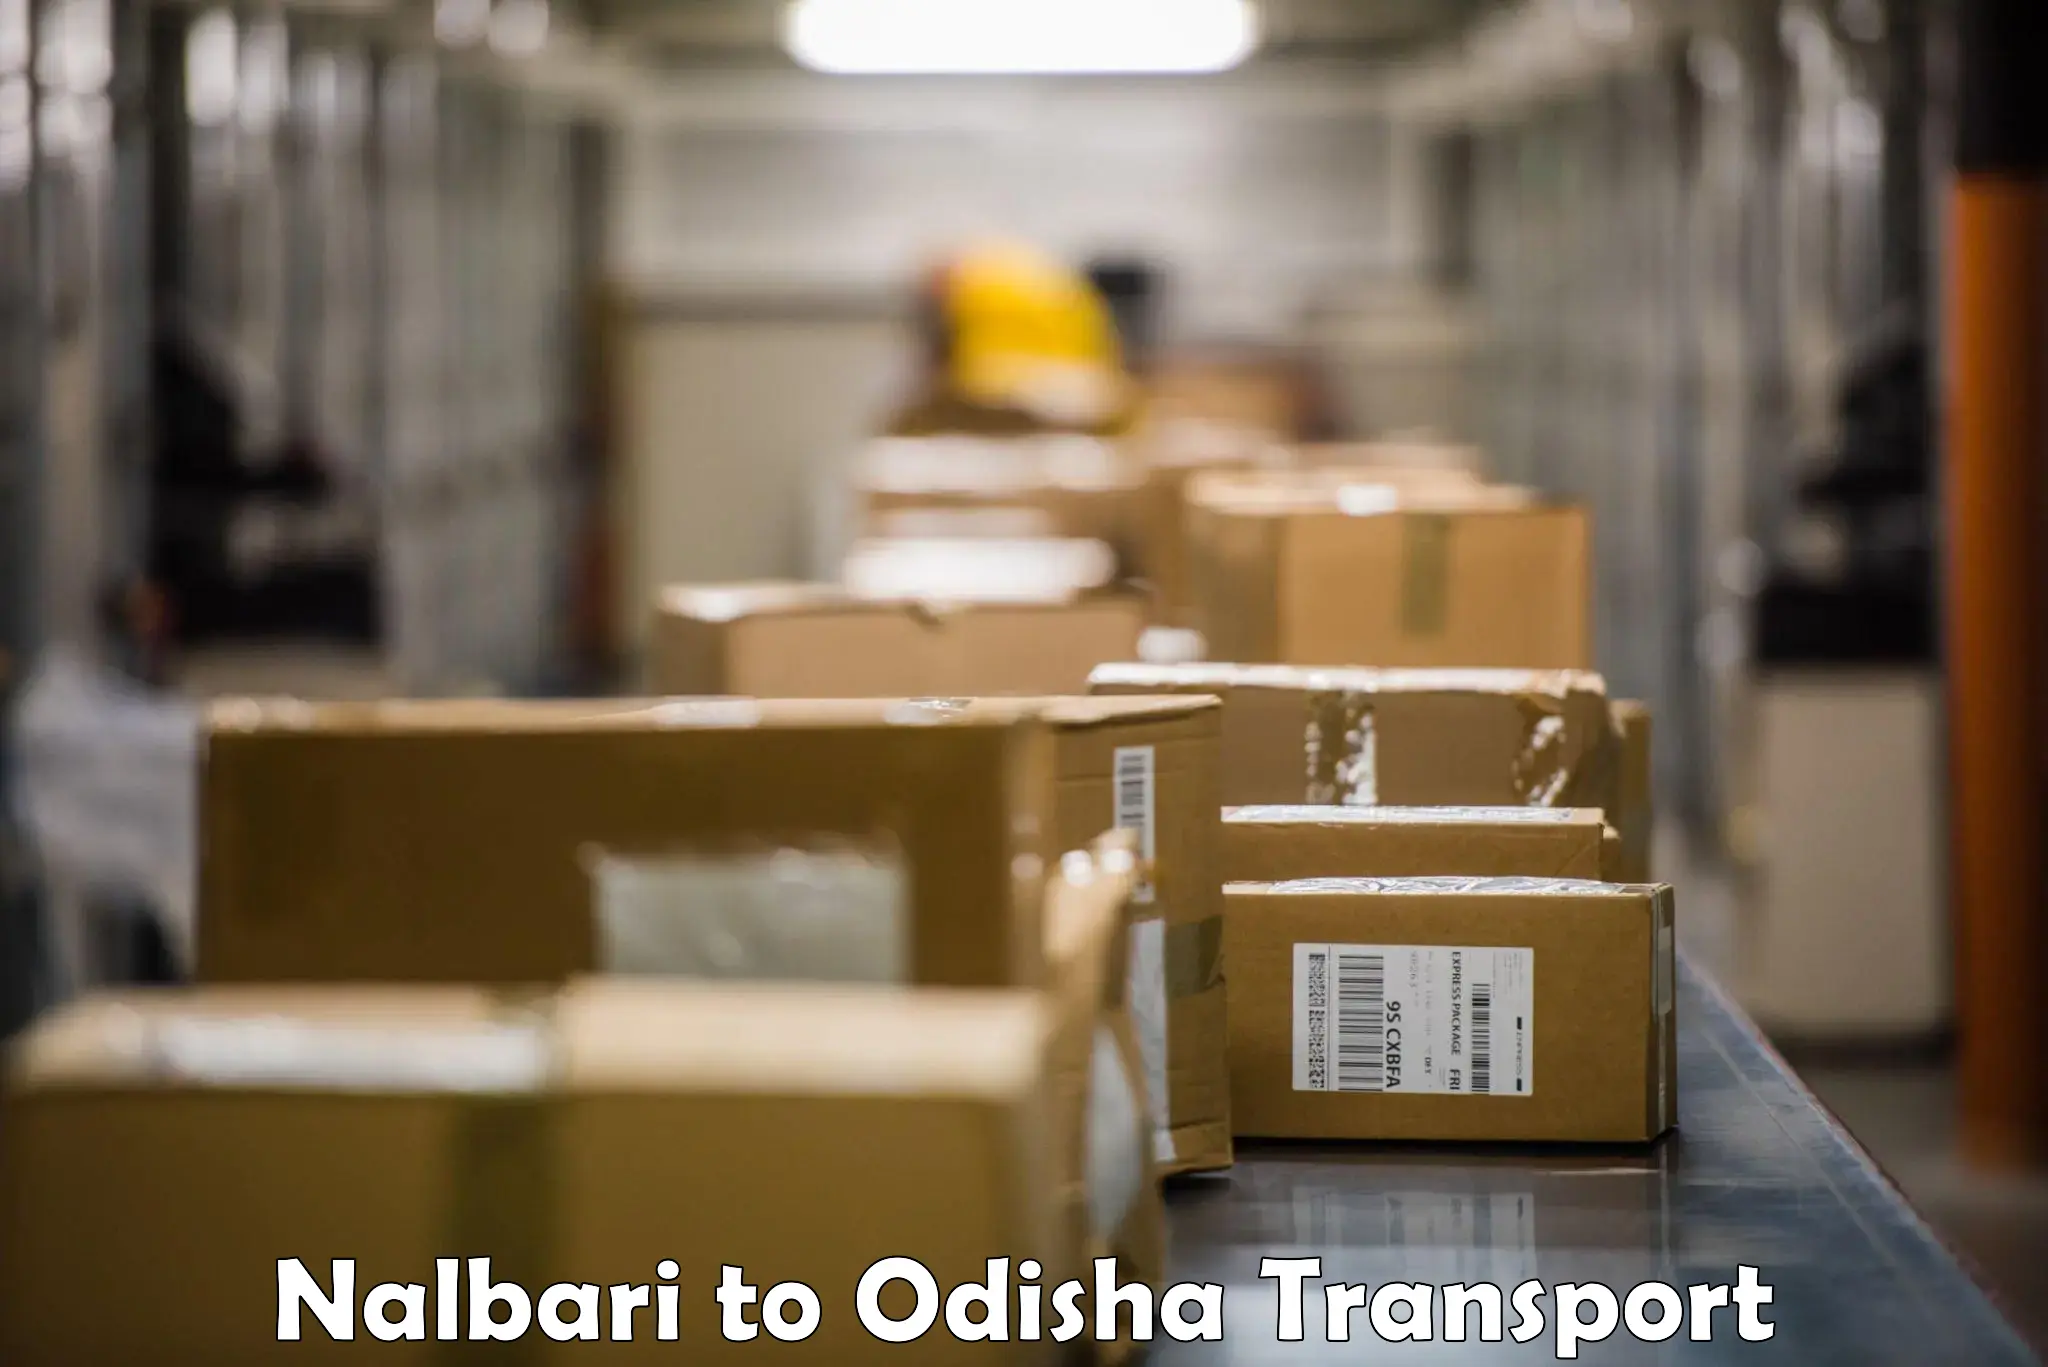 Goods delivery service Nalbari to Jaleswar